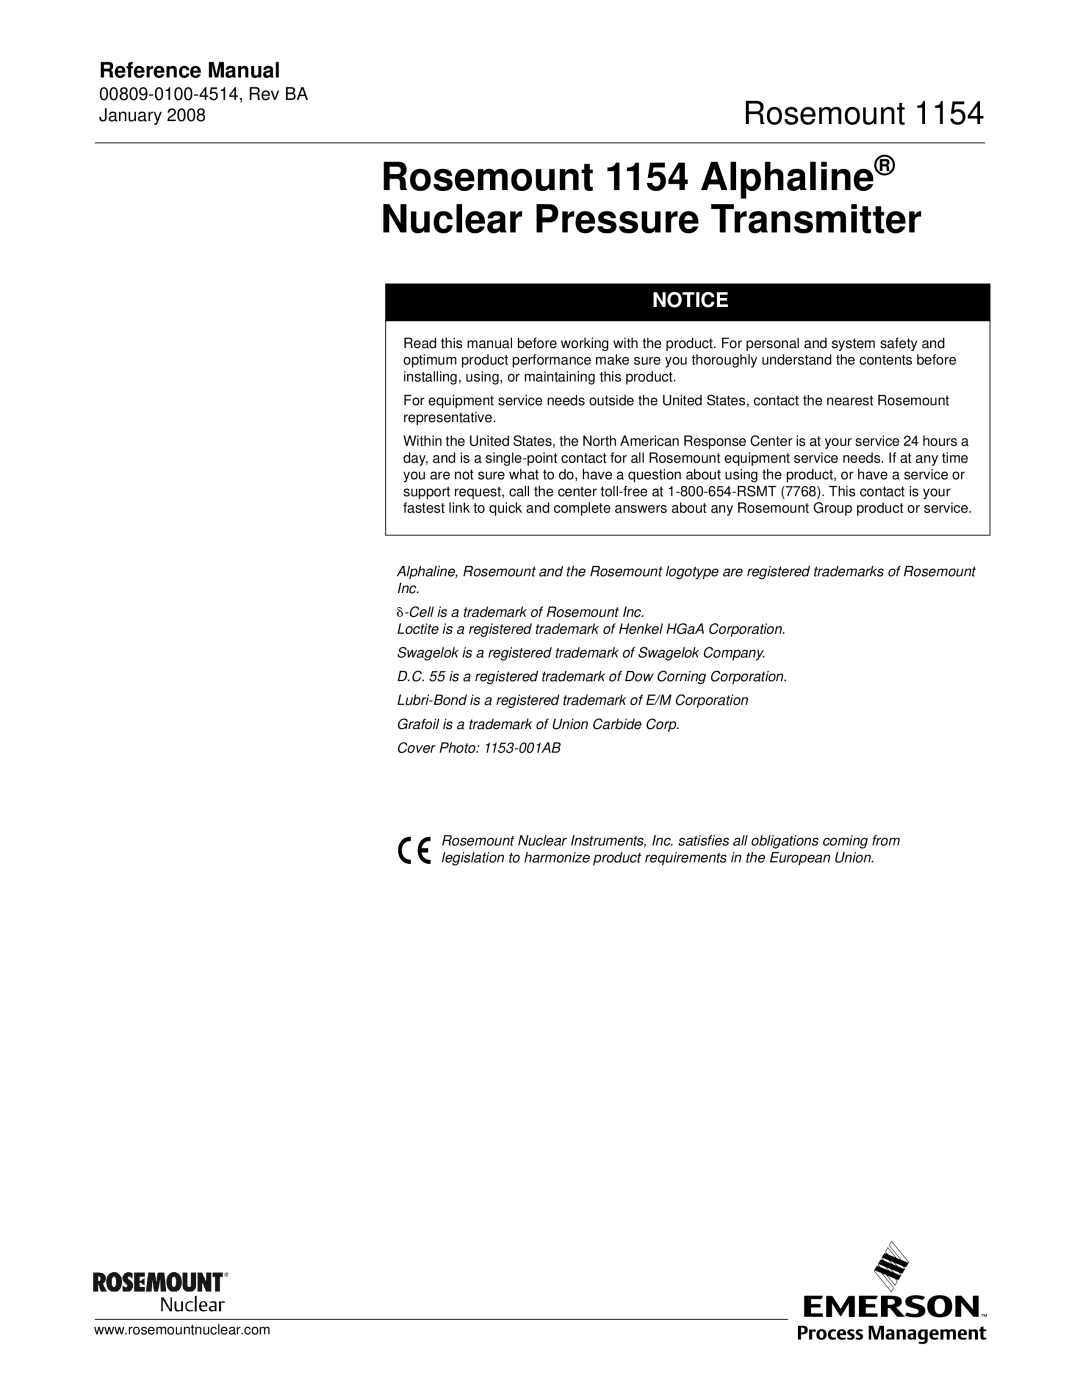 Emerson 00809-0100-4514 manual Reference Manual, Rosemount 1154 Alphaline Nuclear Pressure Transmitter 